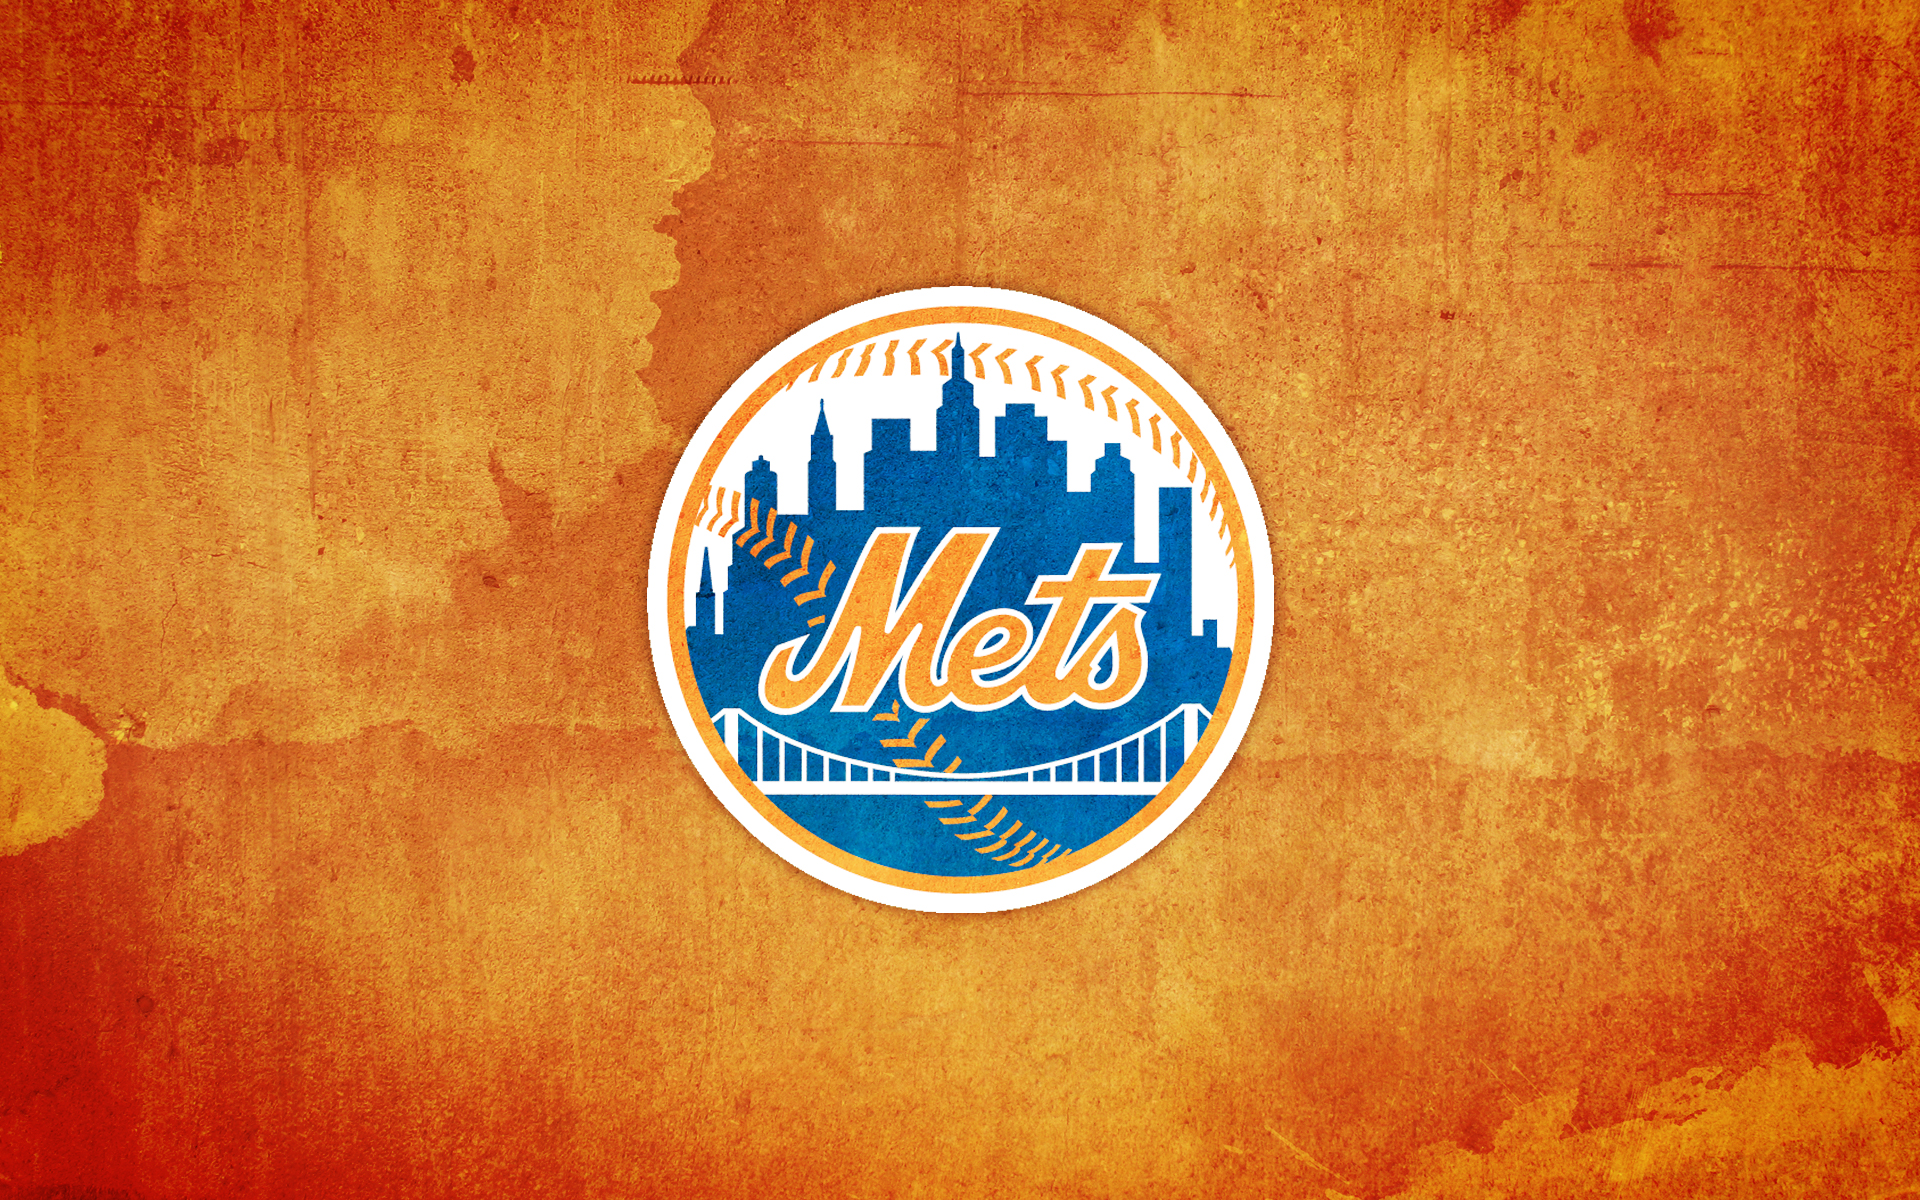 New York Mets wallpapers New York Mets background